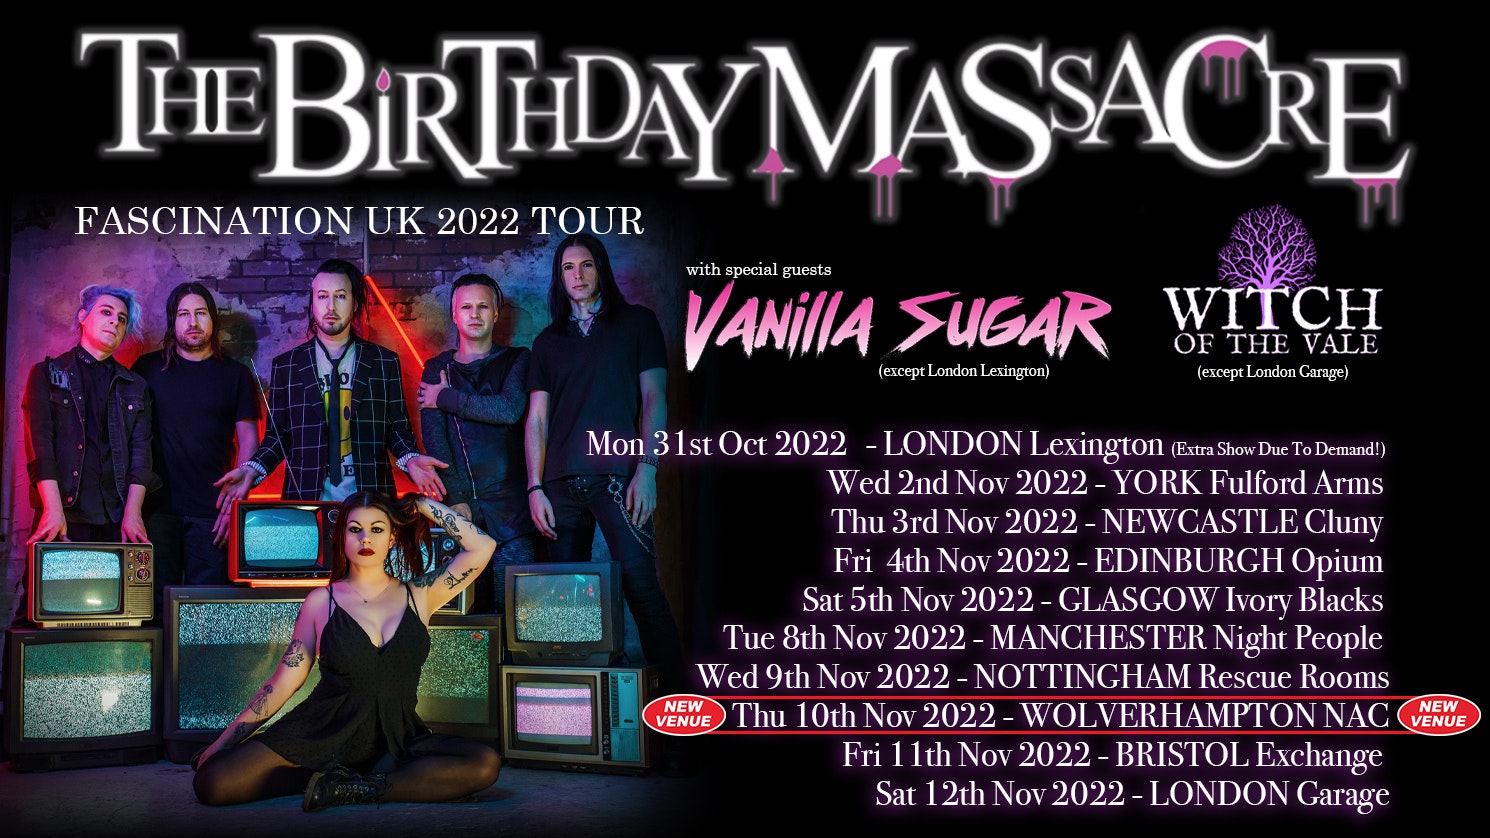 THE BIRTHDAY MASSACRE – Fascination UK 2022 Tour